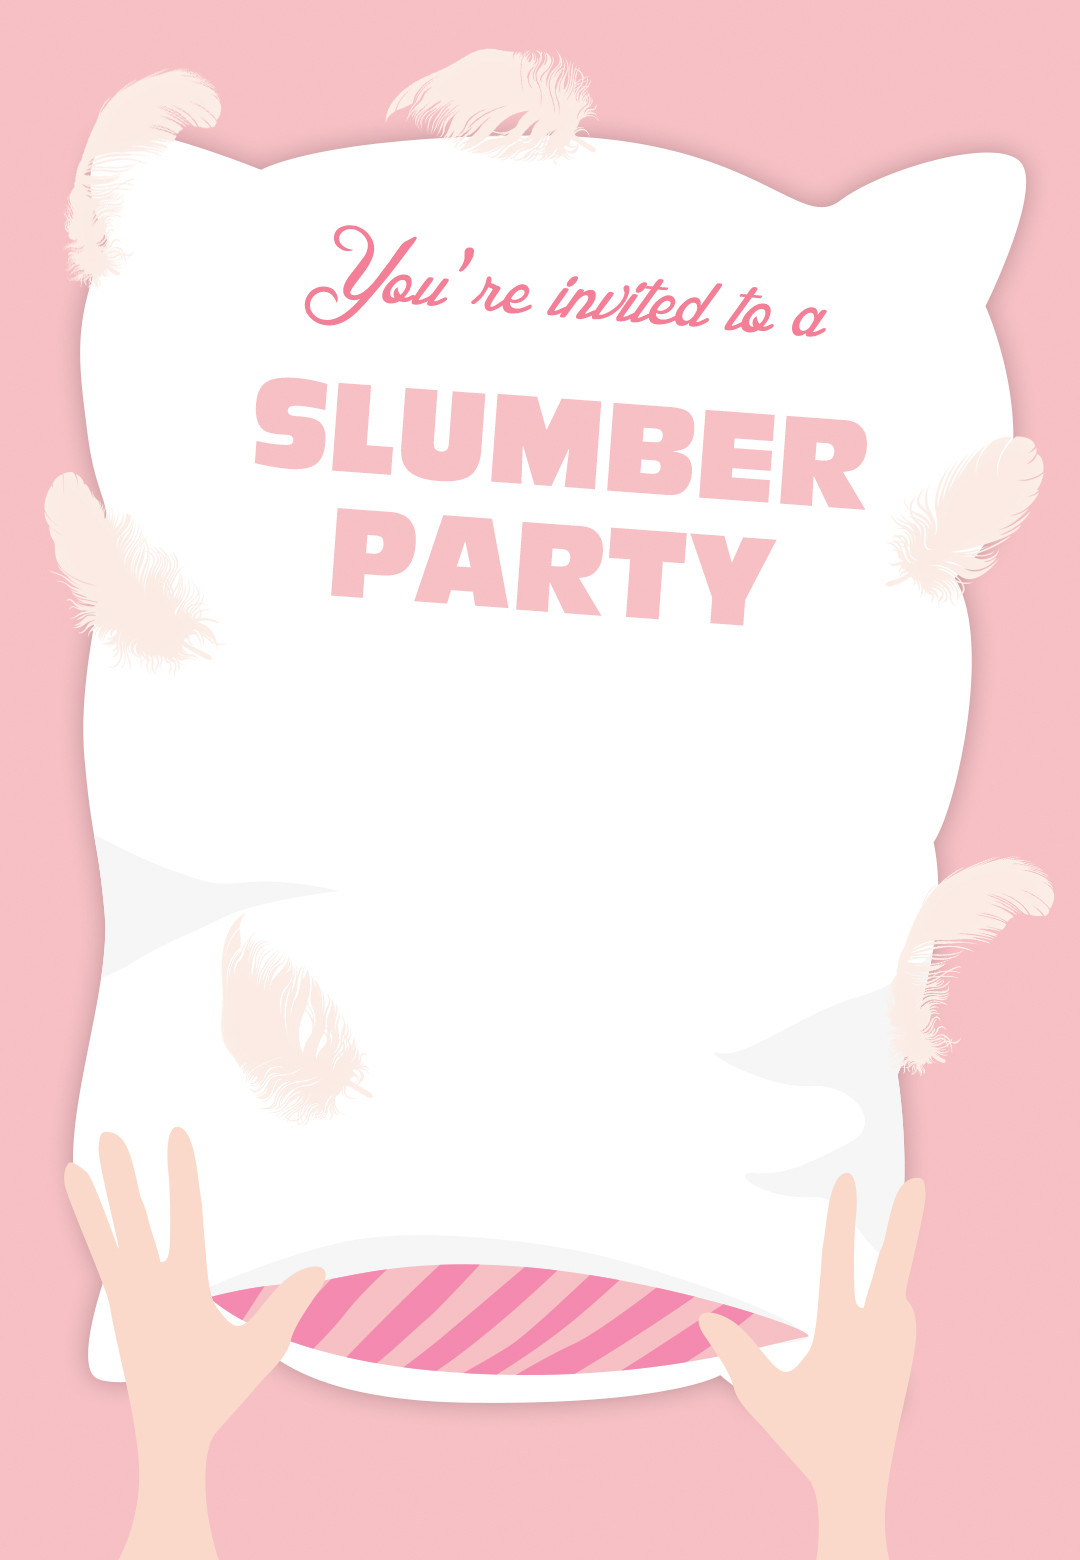 Sleepover Birthday Party Invitations
 50 Beautiful Slumber Party Invitations